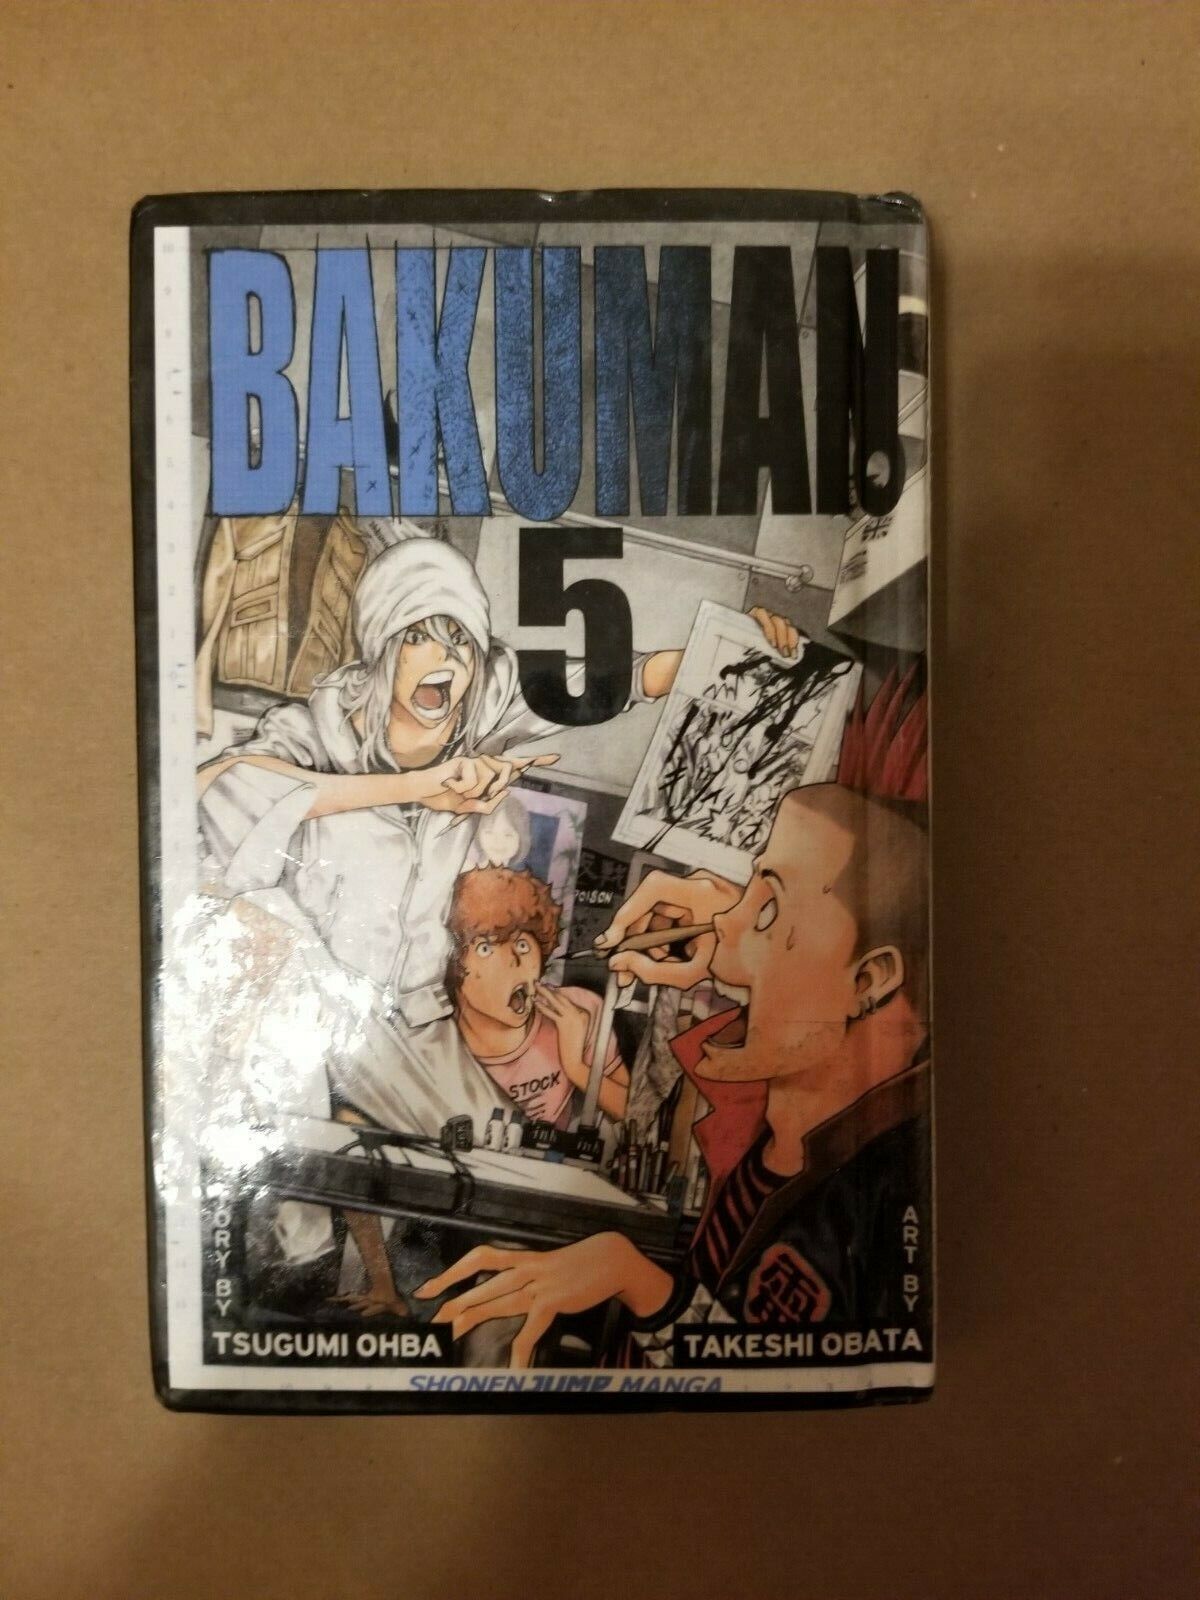 Bakuman Manga Volume 5 (Hardcover)